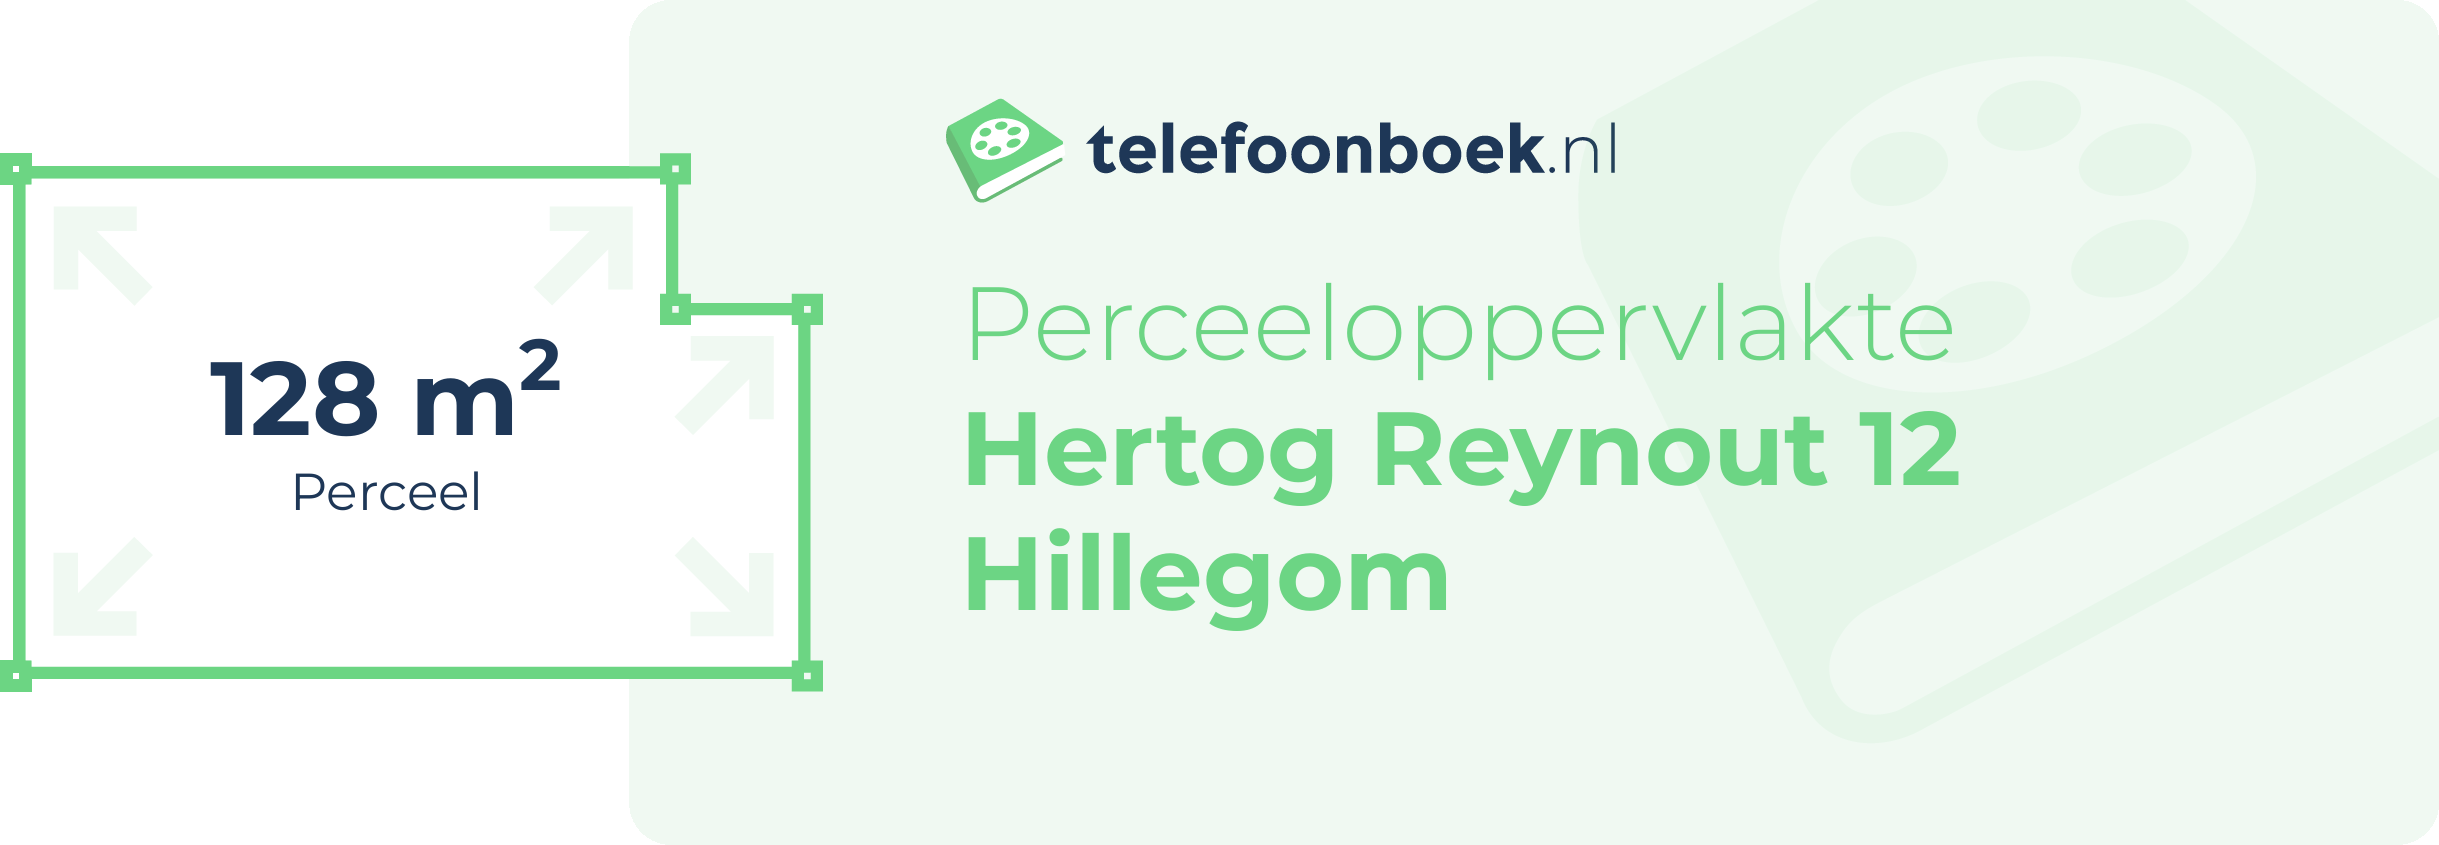 Perceeloppervlakte Hertog Reynout 12 Hillegom